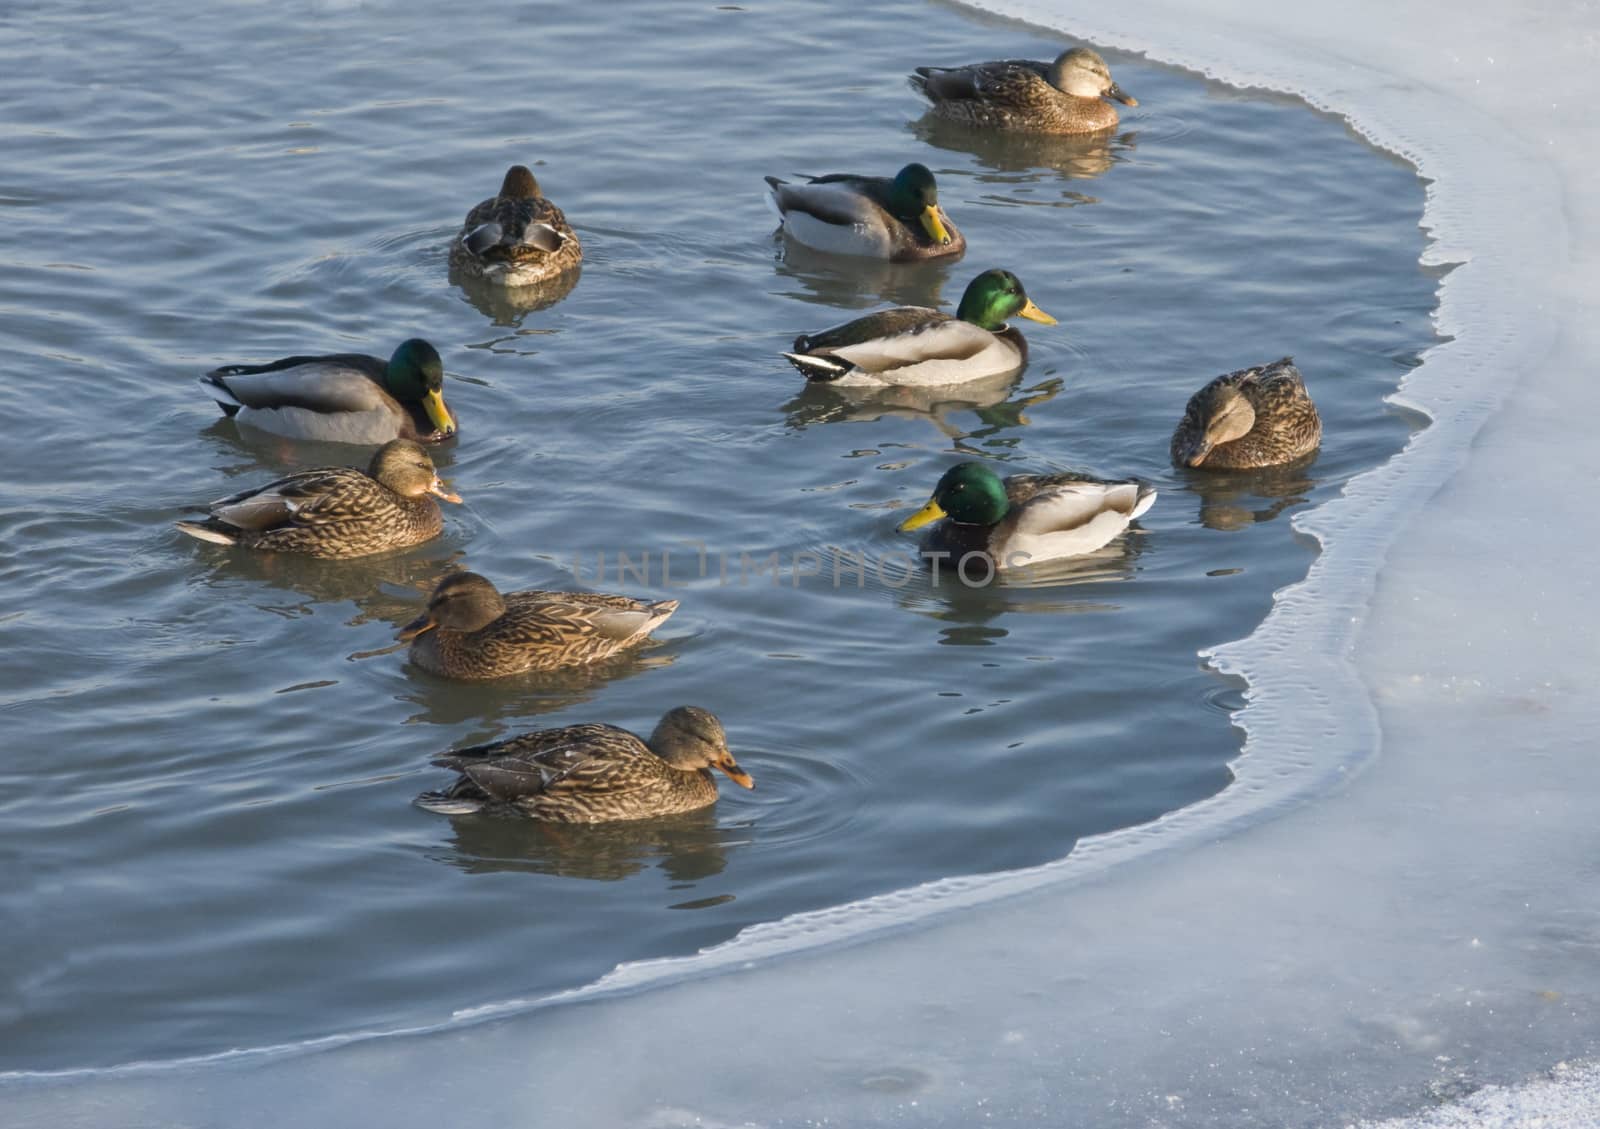 Ducks in winter pond by wander